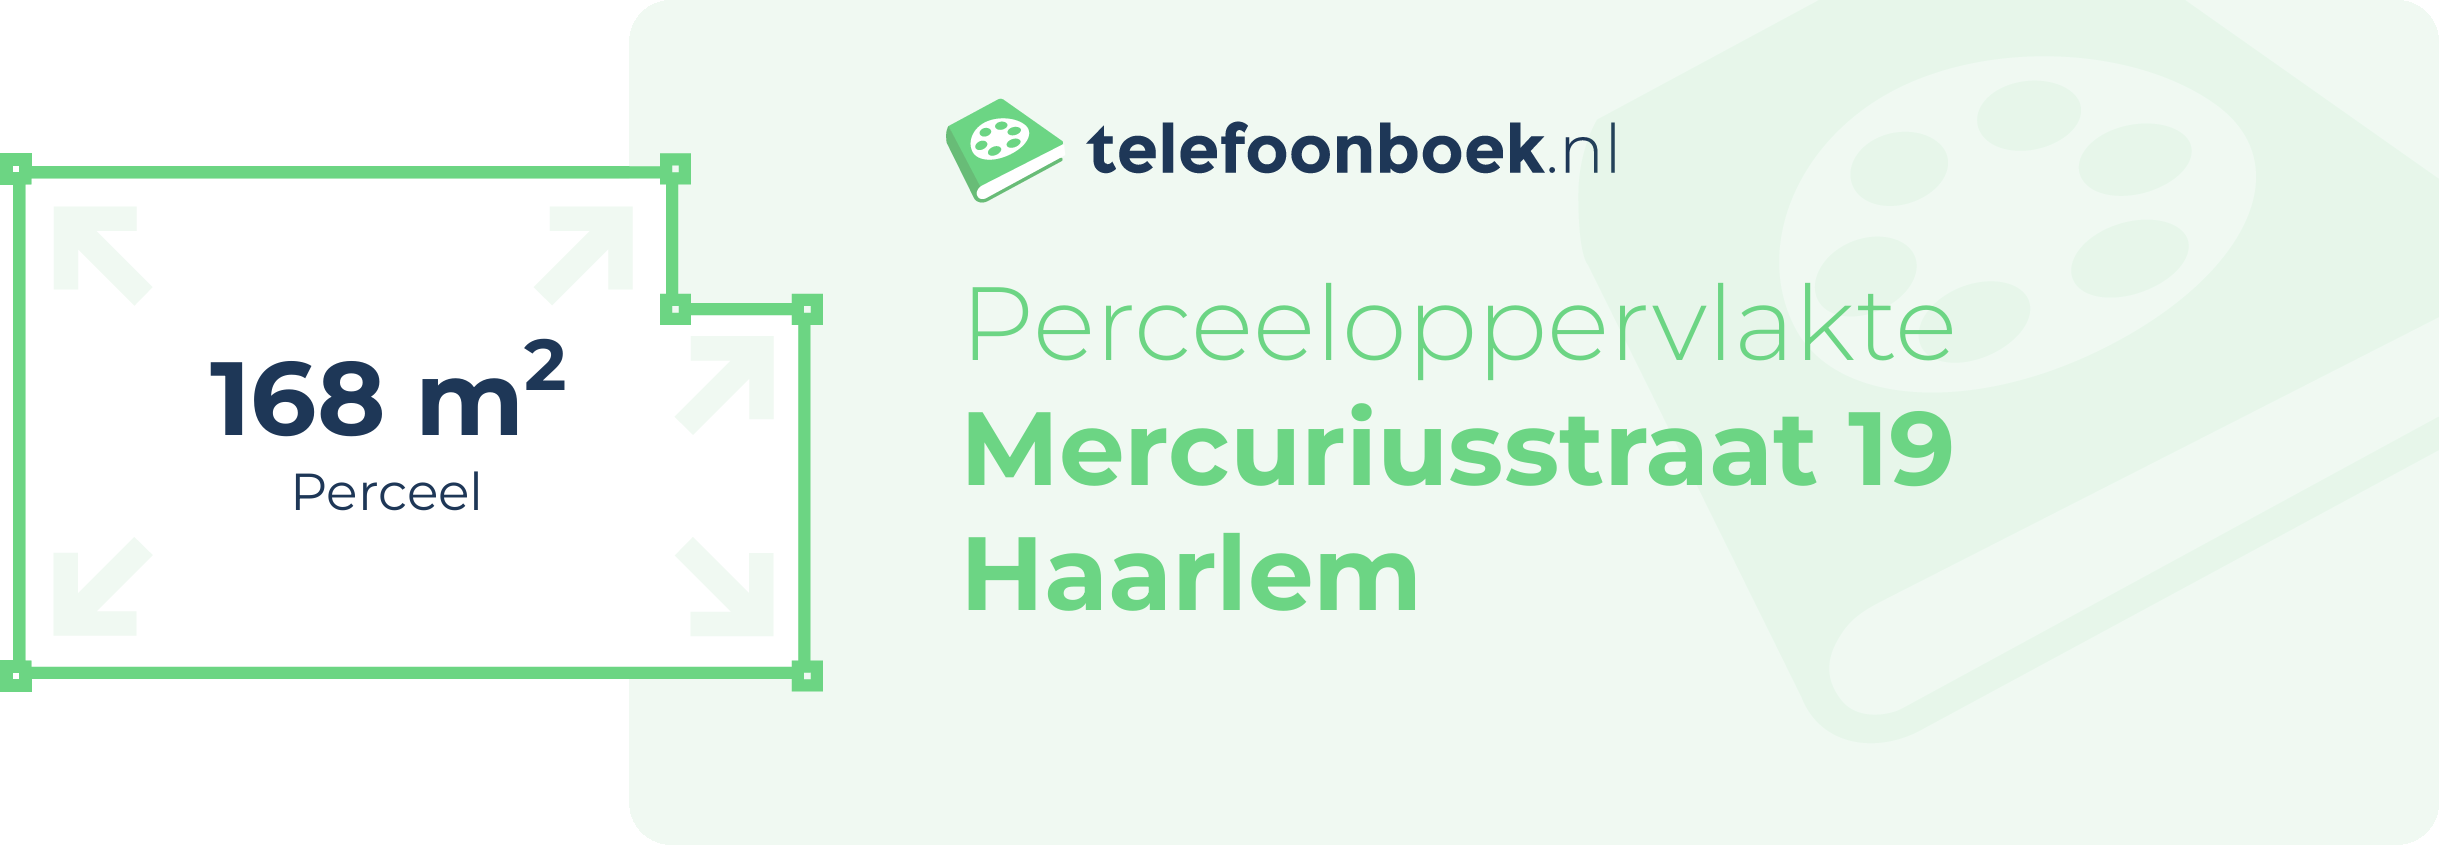 Perceeloppervlakte Mercuriusstraat 19 Haarlem